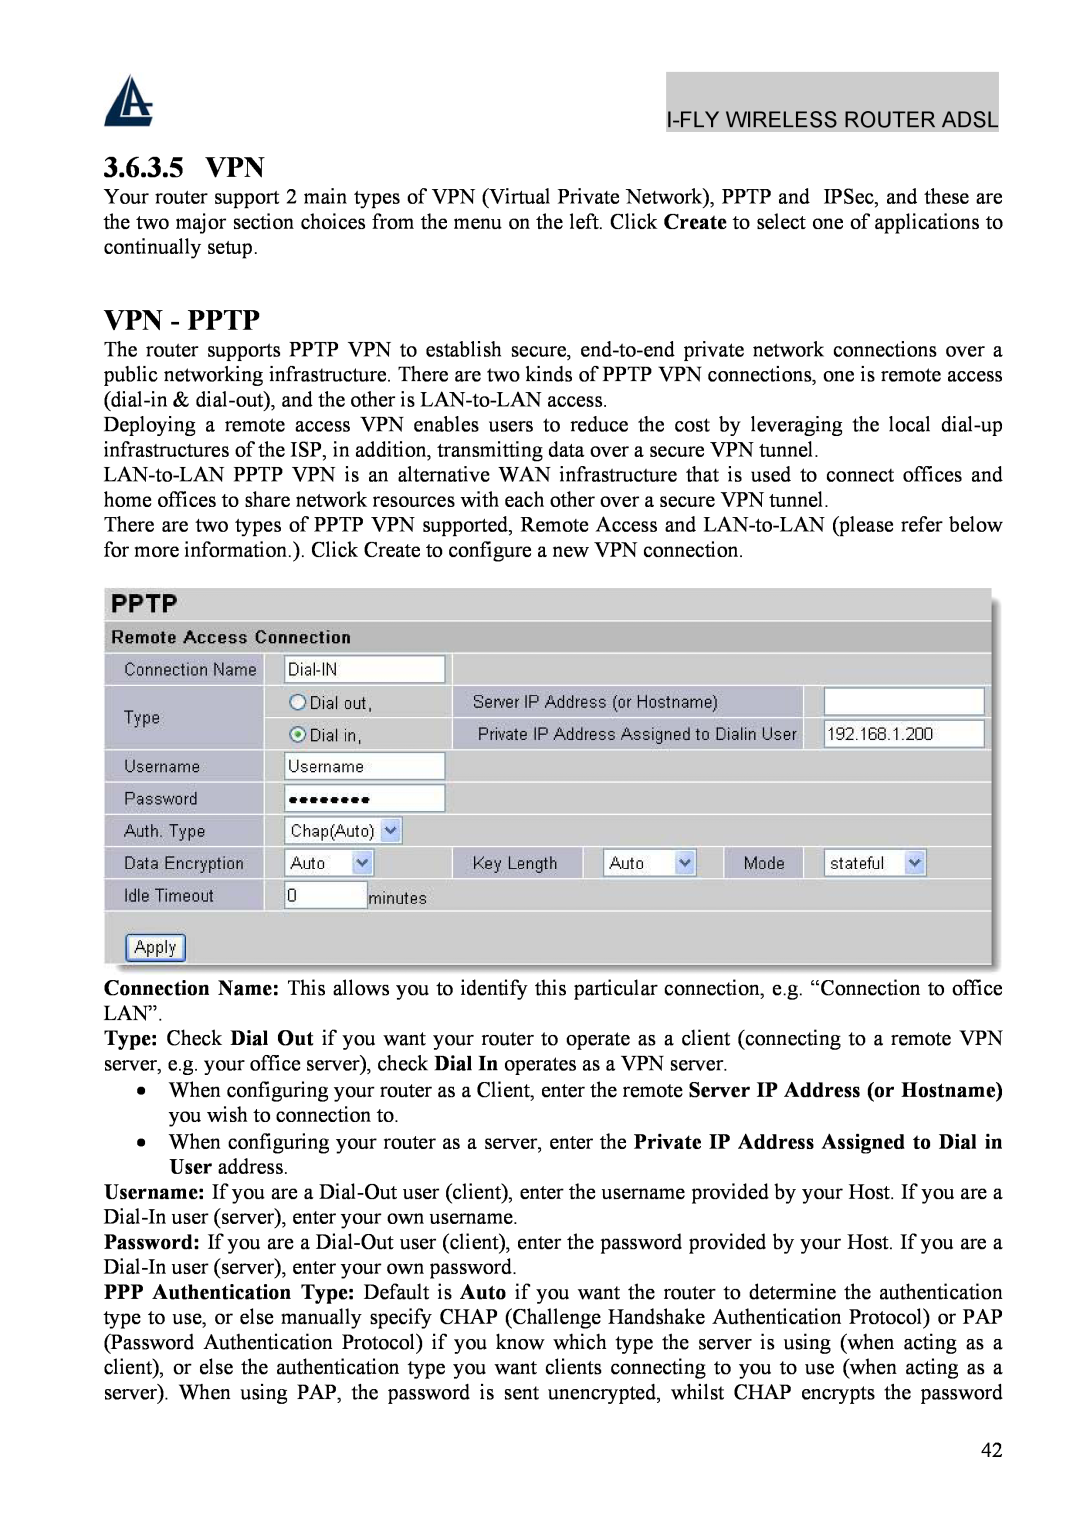 Atlantis Land A02-WRA4-54G manual 3.6.3.5 VPN, Vpn - Pptp 